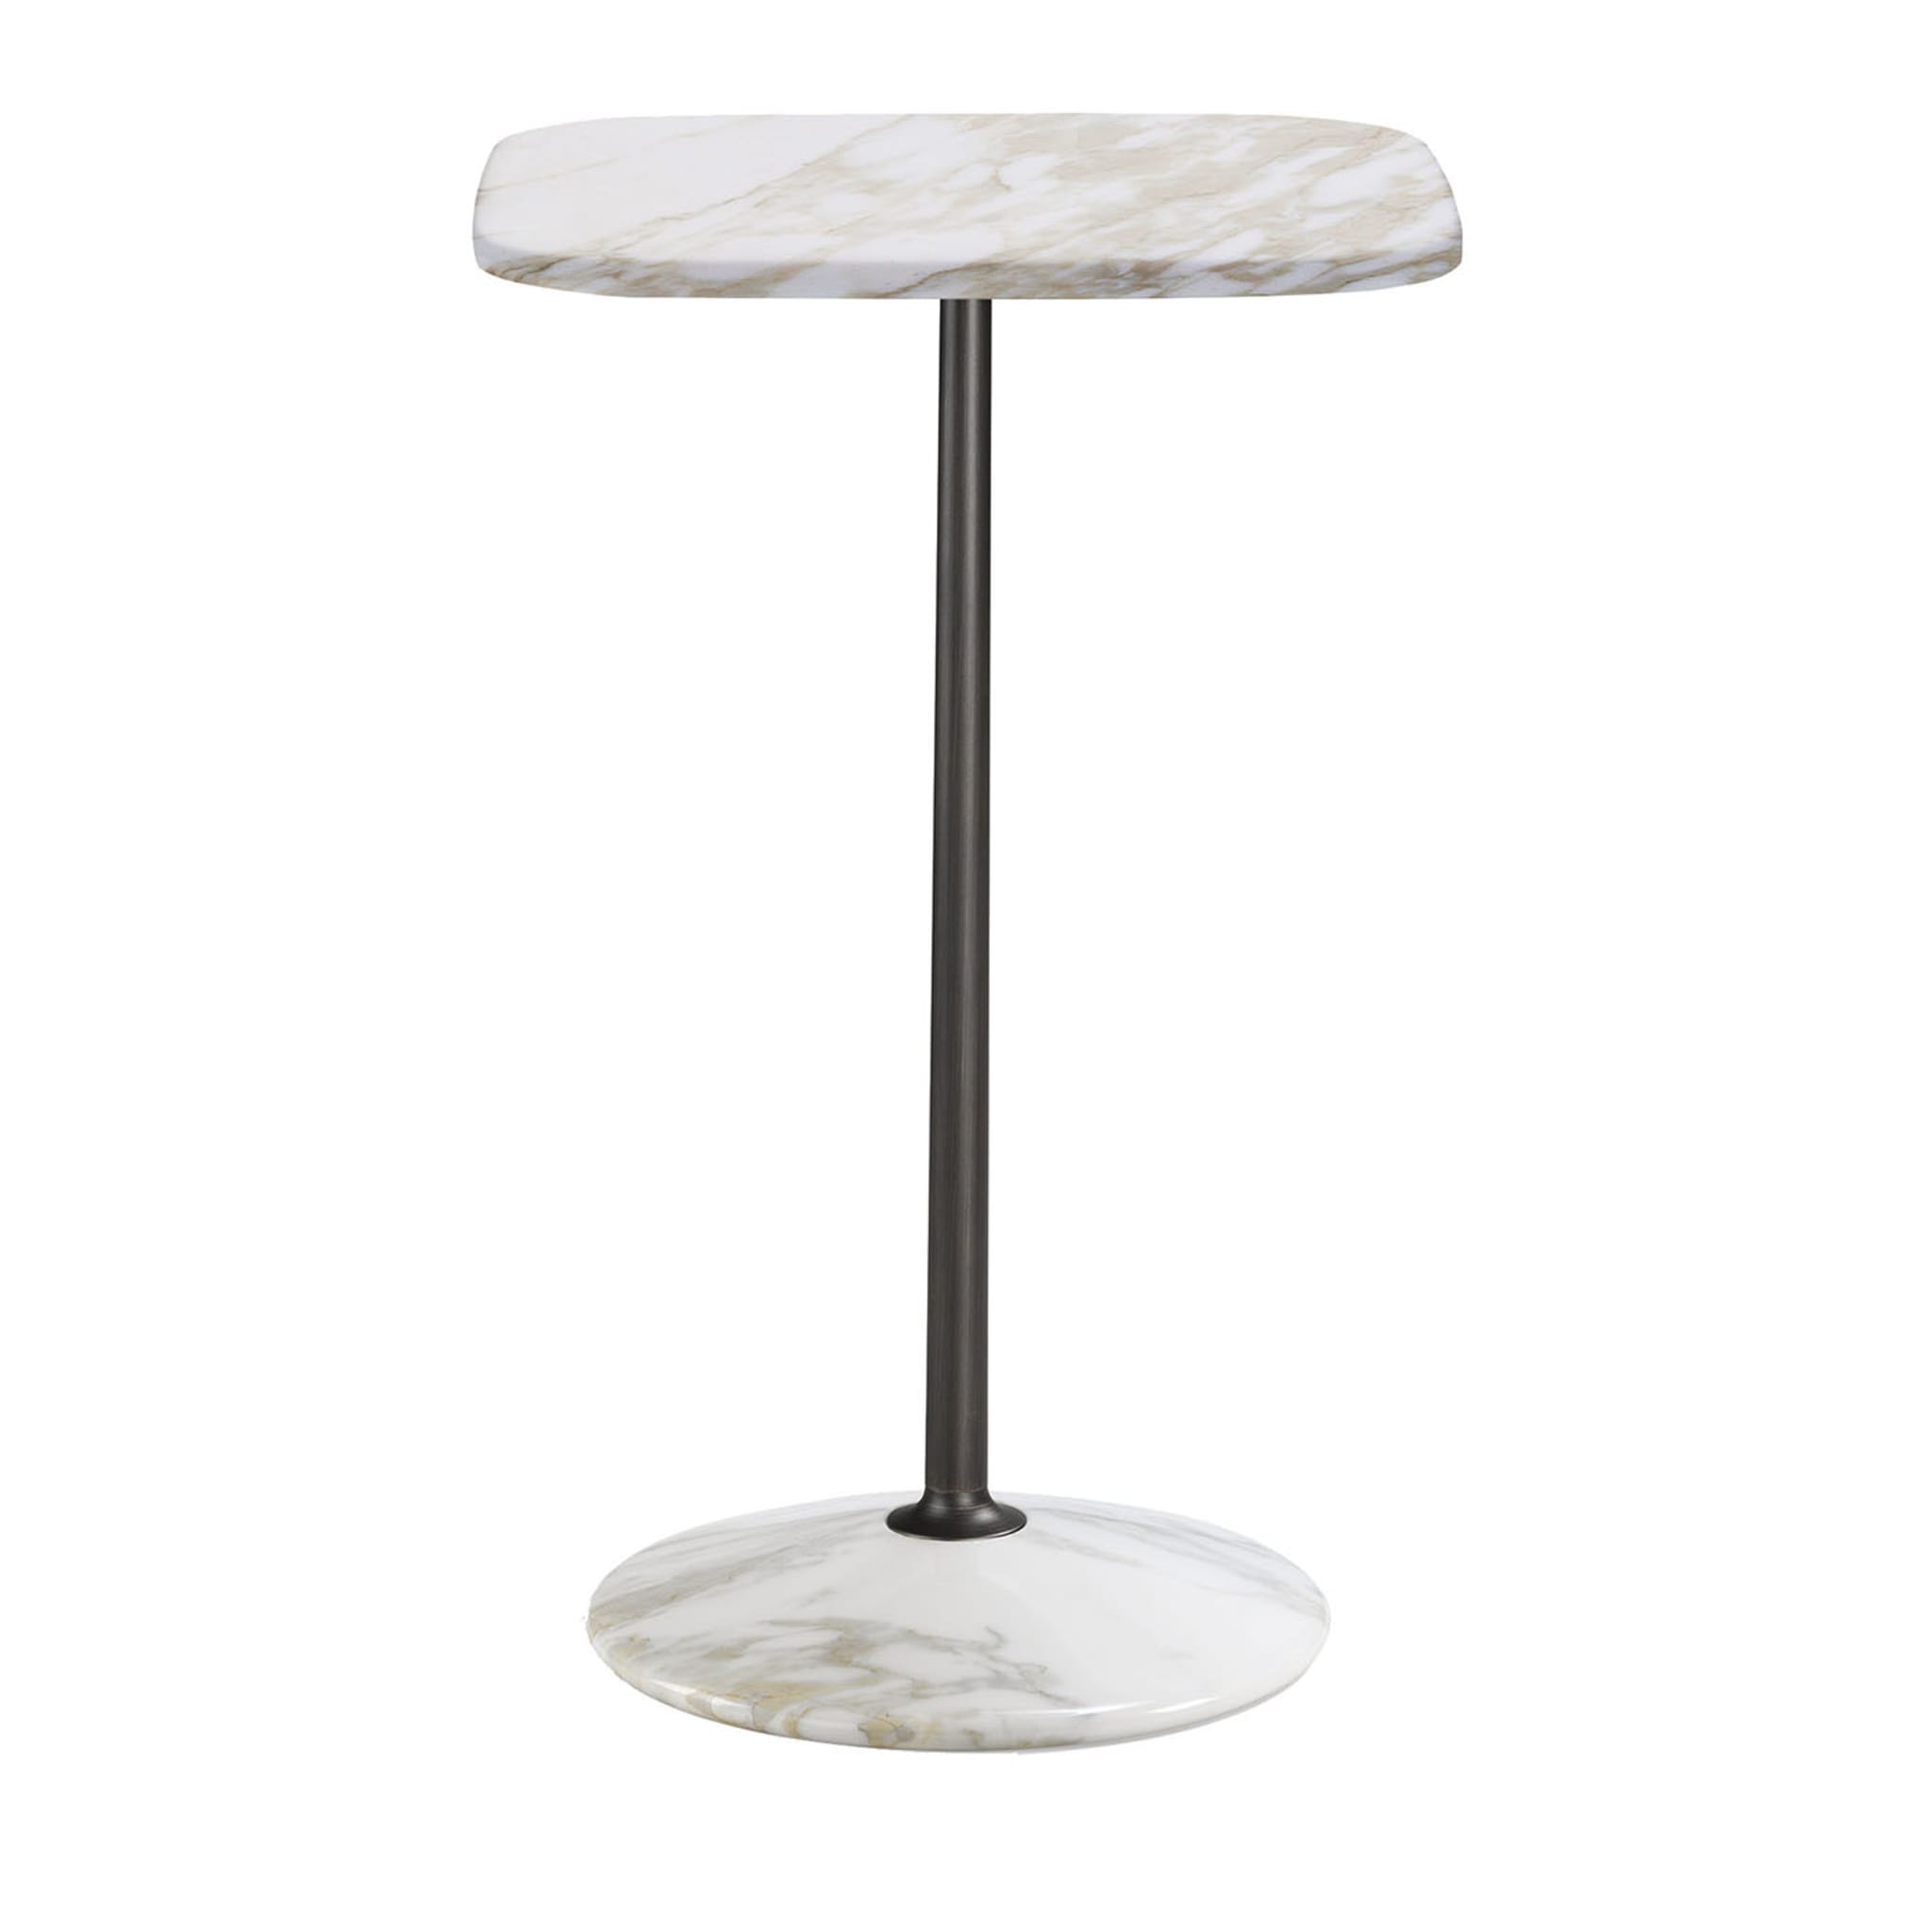 Arnold Table carrée en marbre blanc - Vue principale